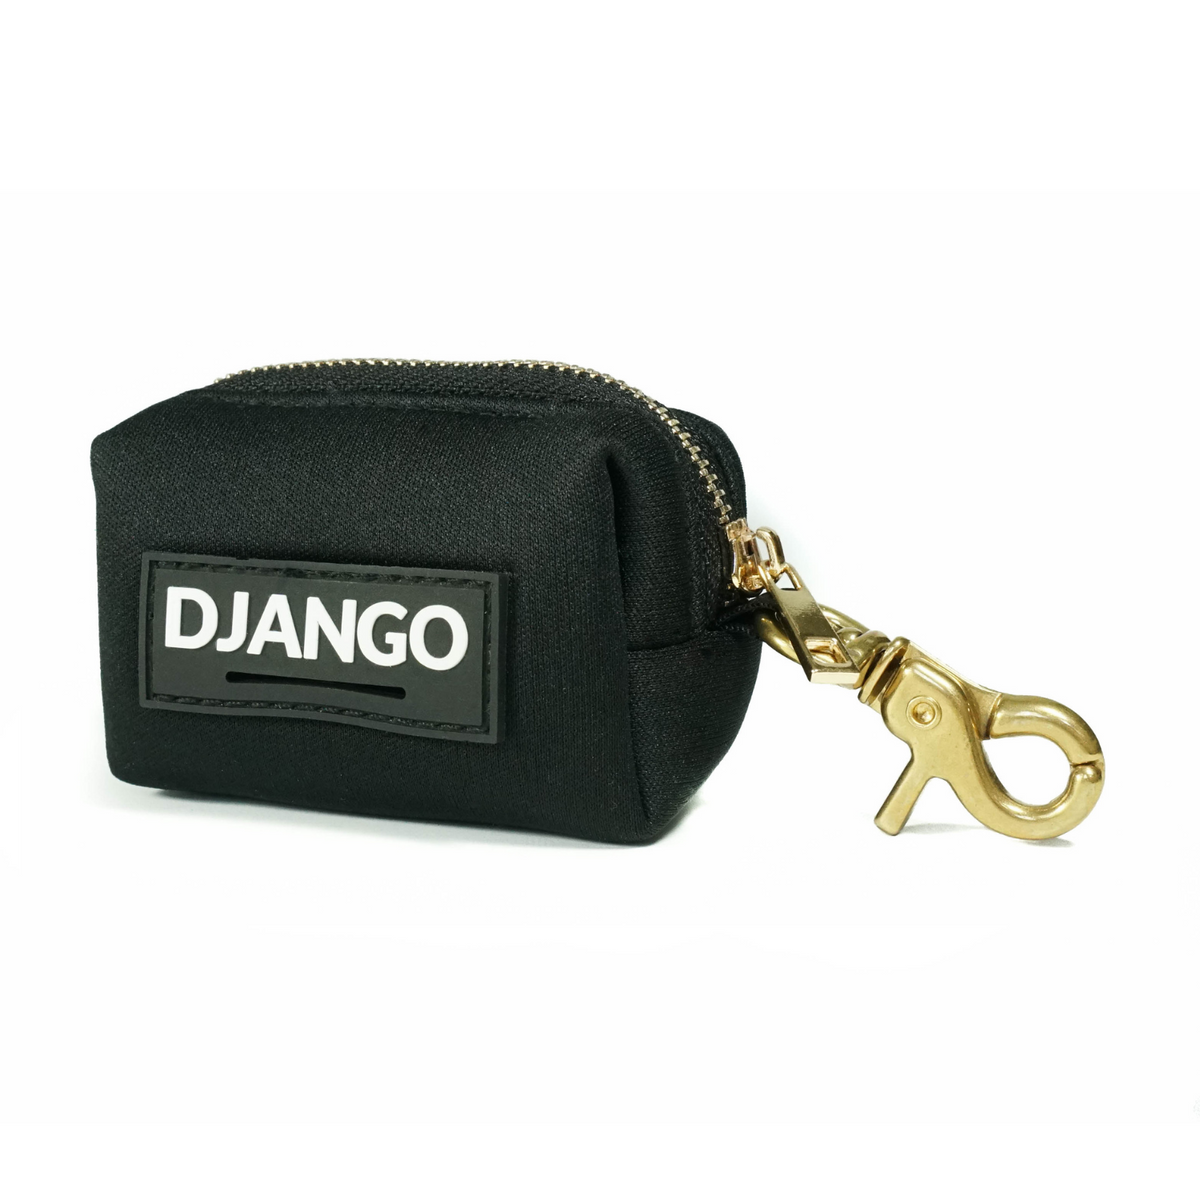 DJANGO Dog Waste Bag Holder in Black - djangobrand.com